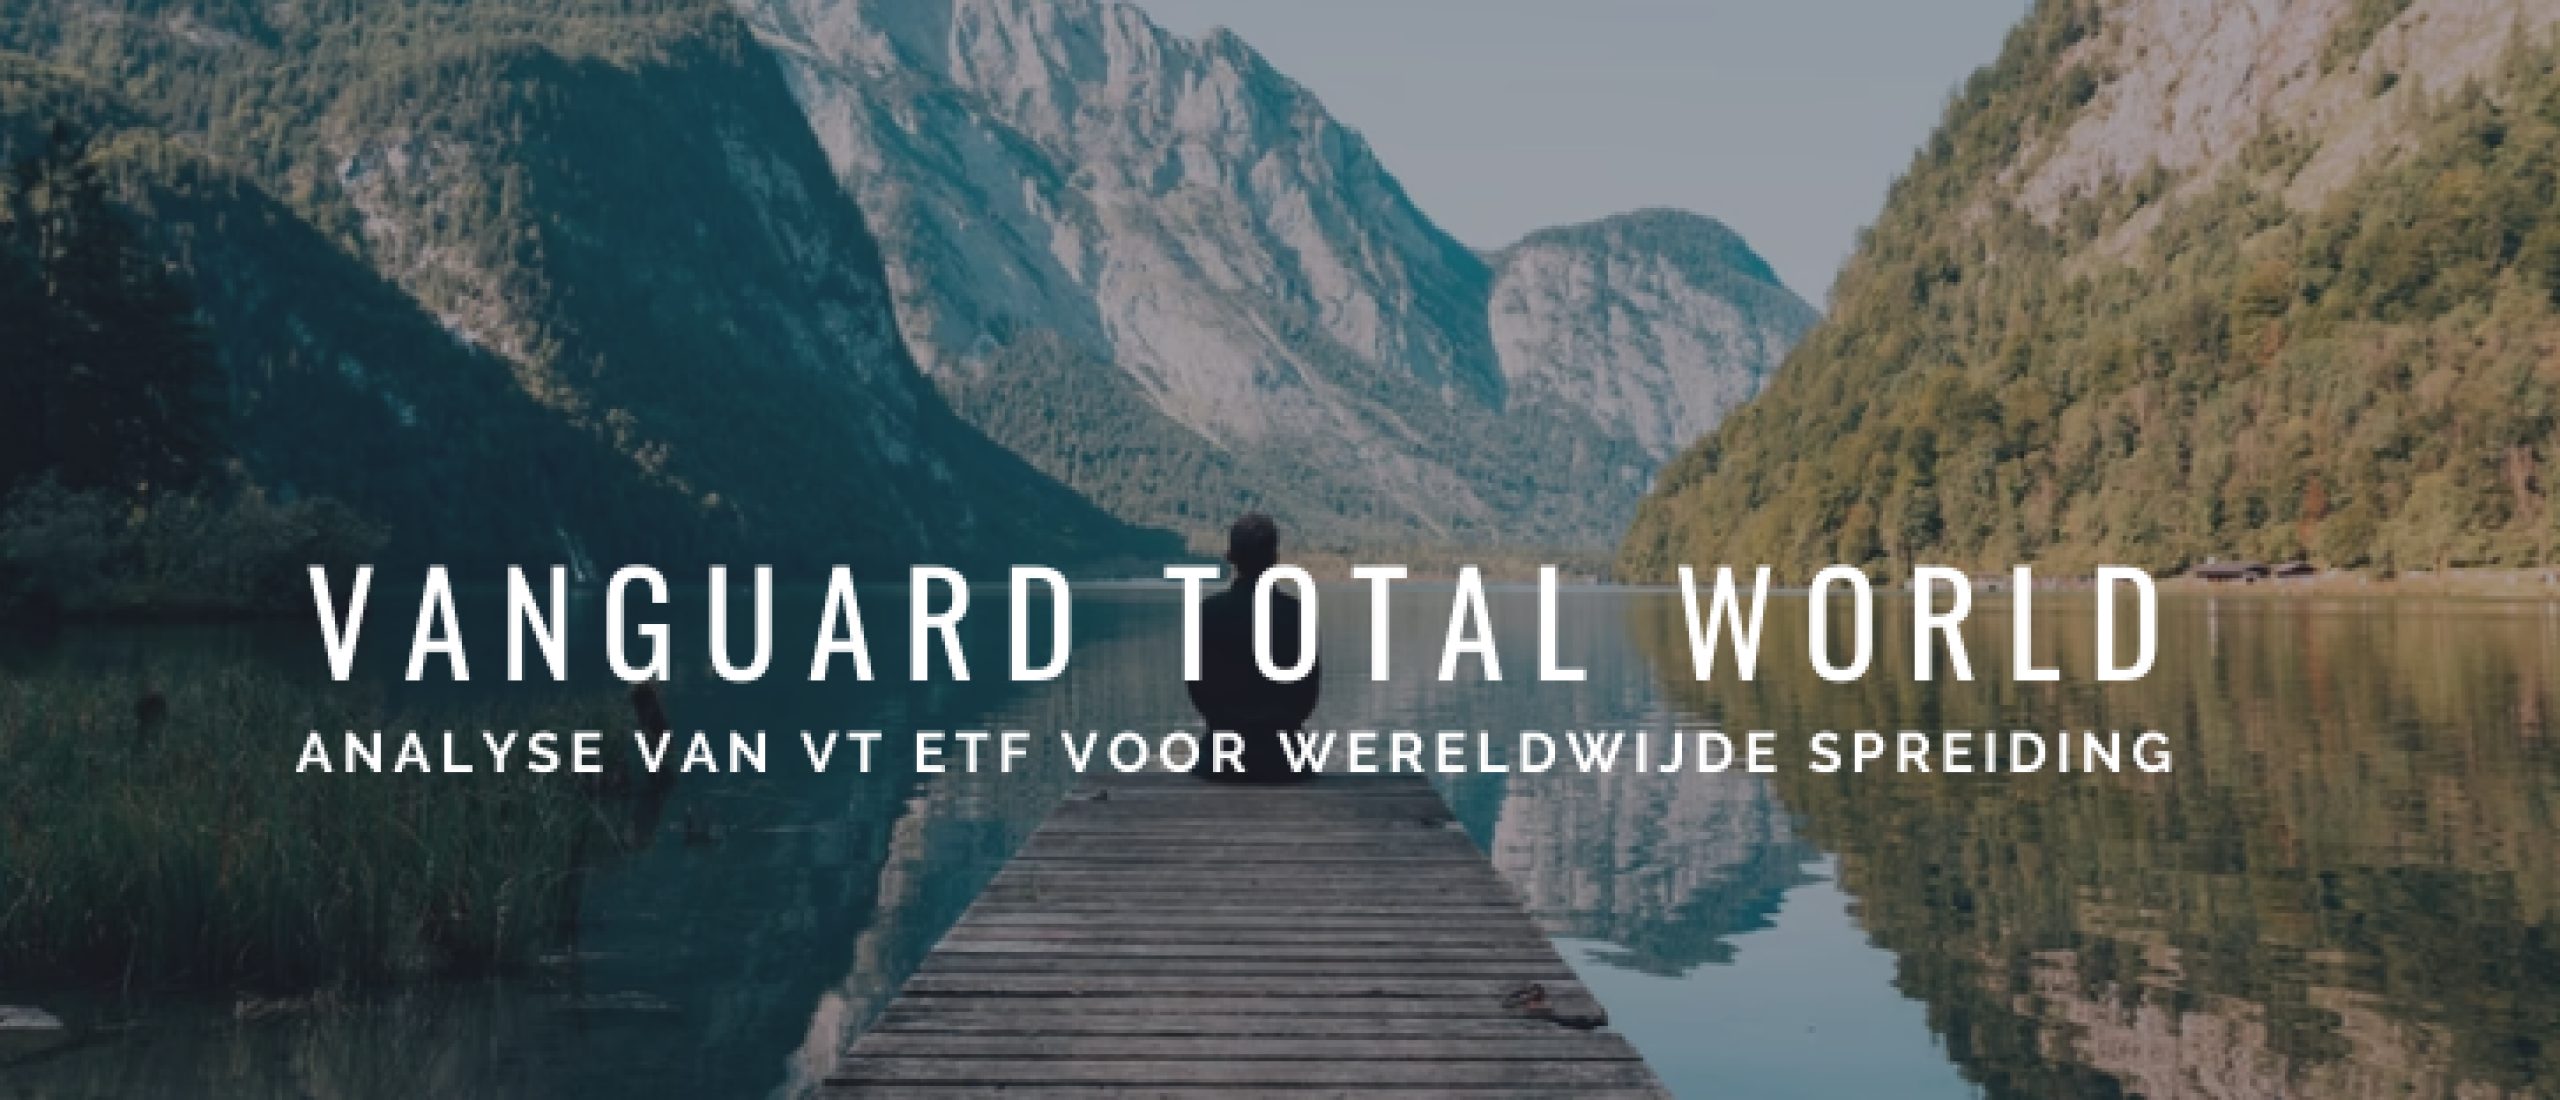 vanguard-total-world-stock-etf-analyse